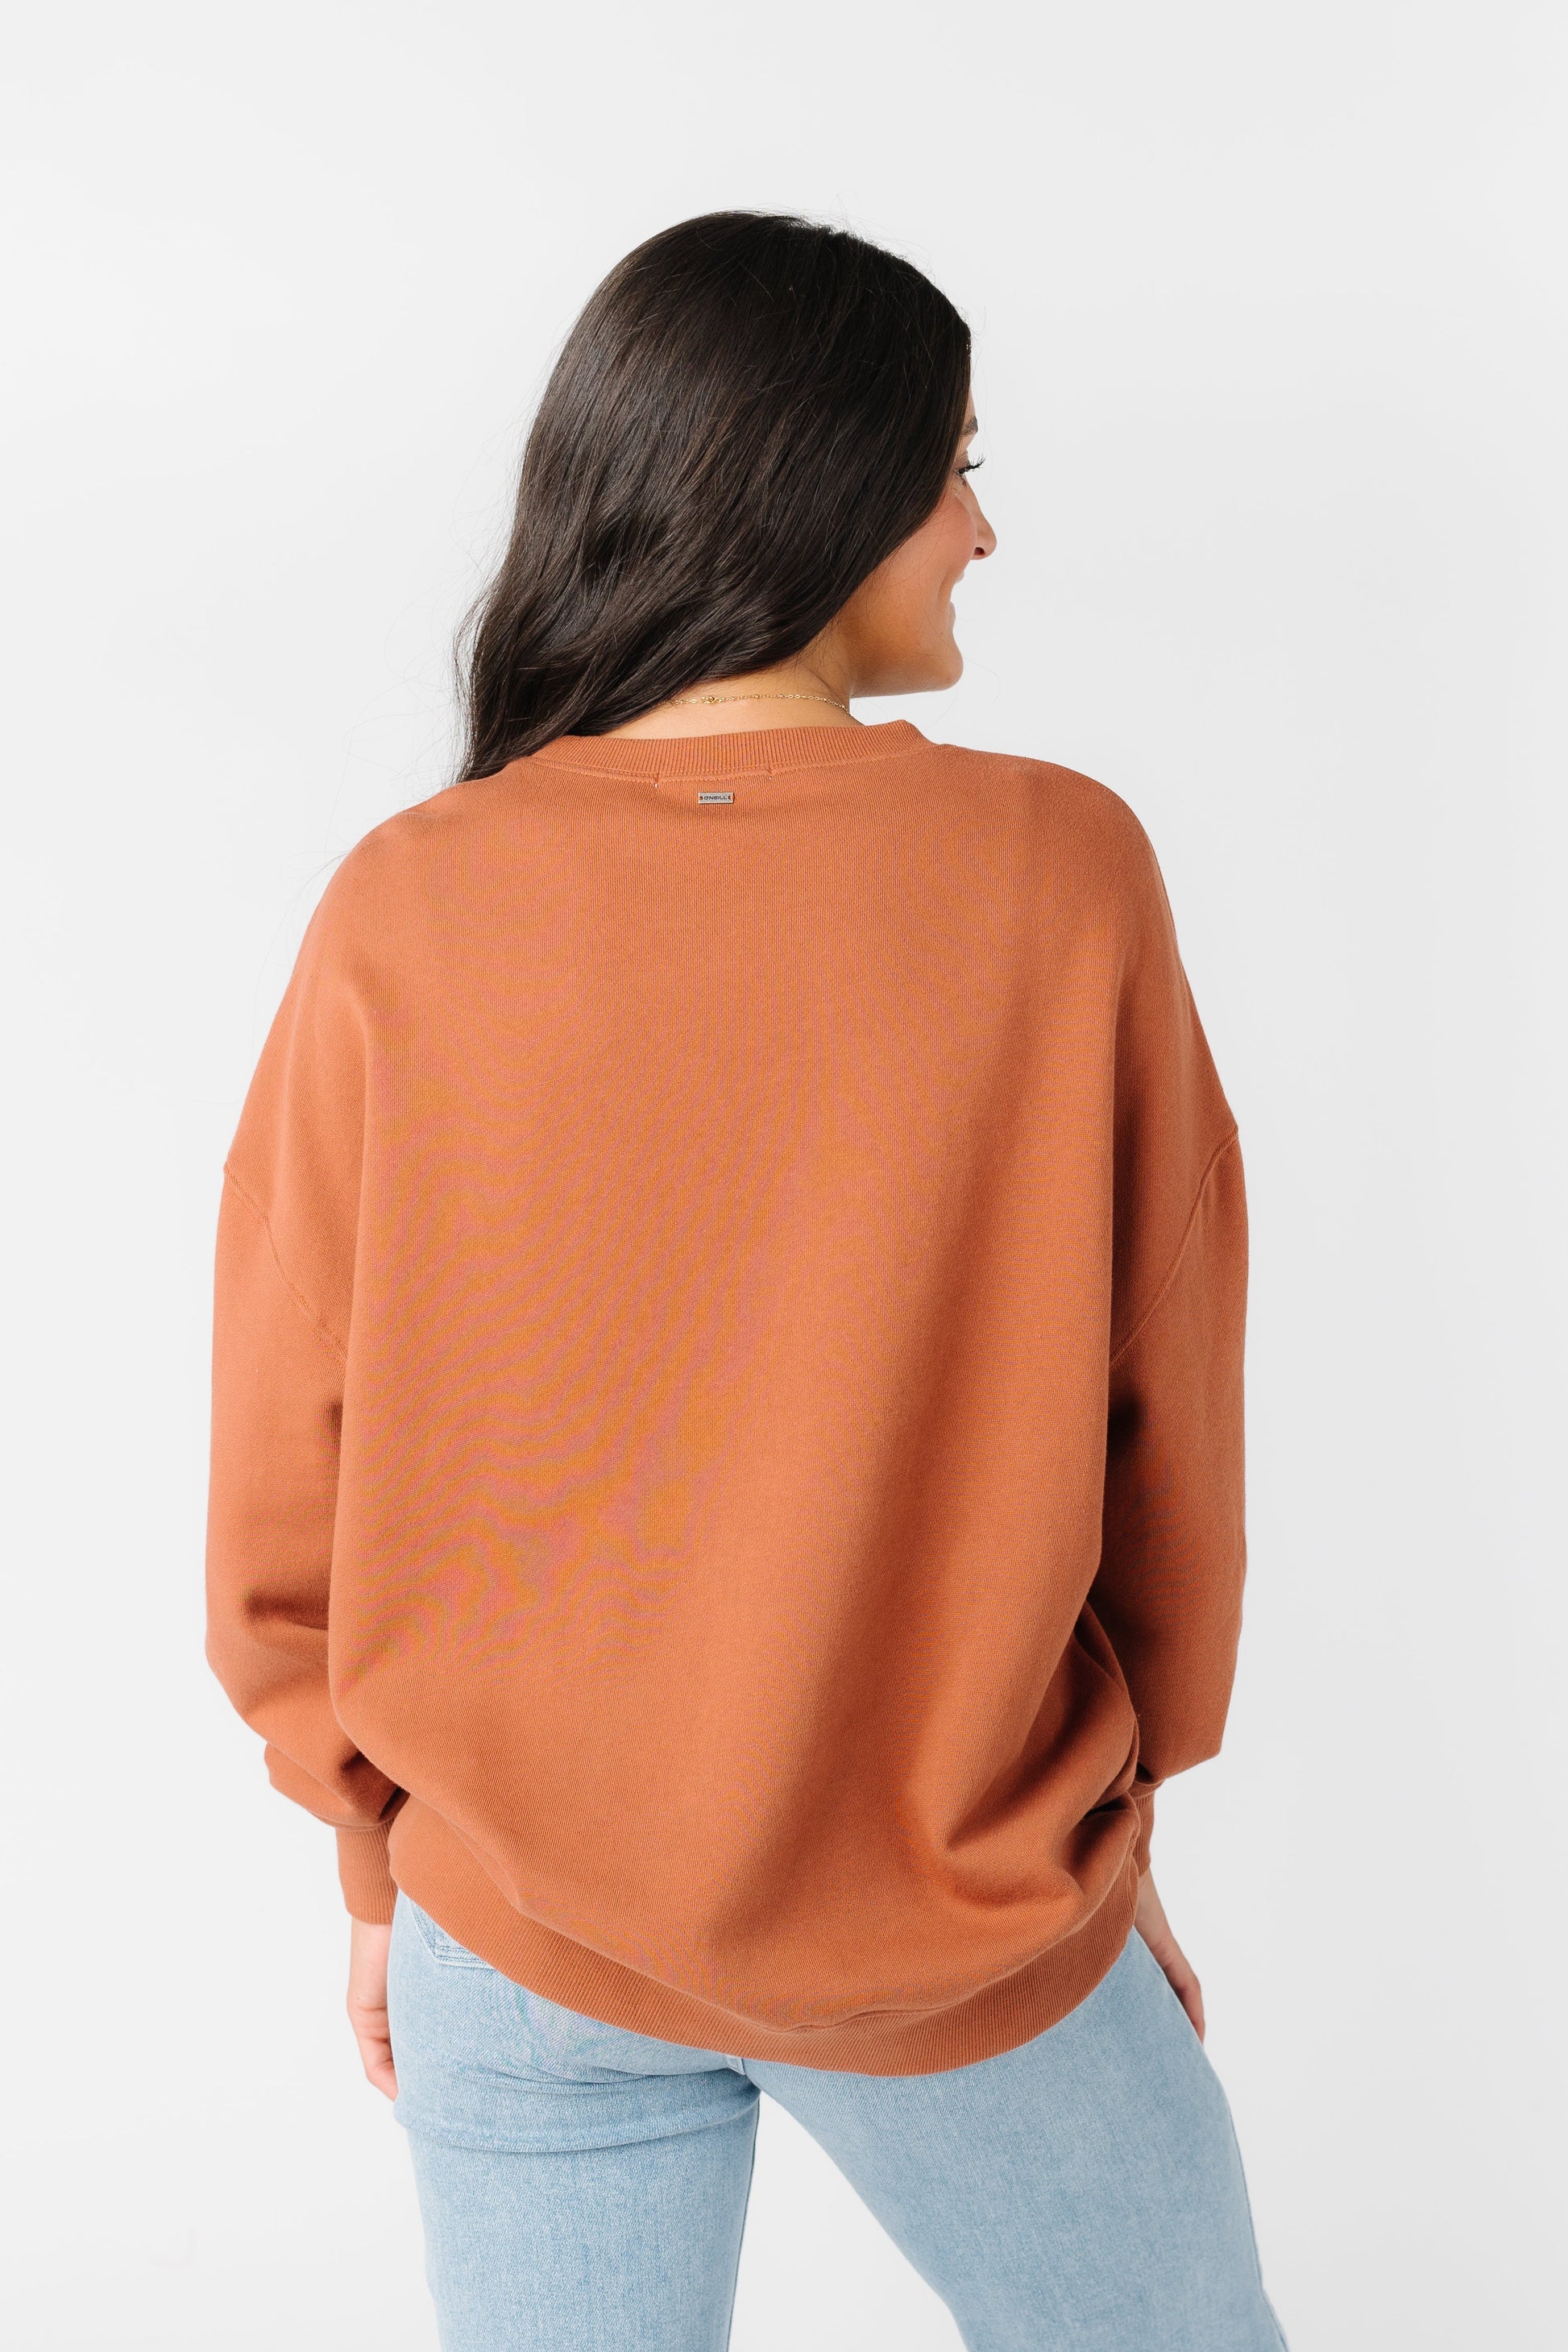 O'Neill Choice Sweatshirt -Rust WOMEN'S SWEATSHIRT O'NEILL 